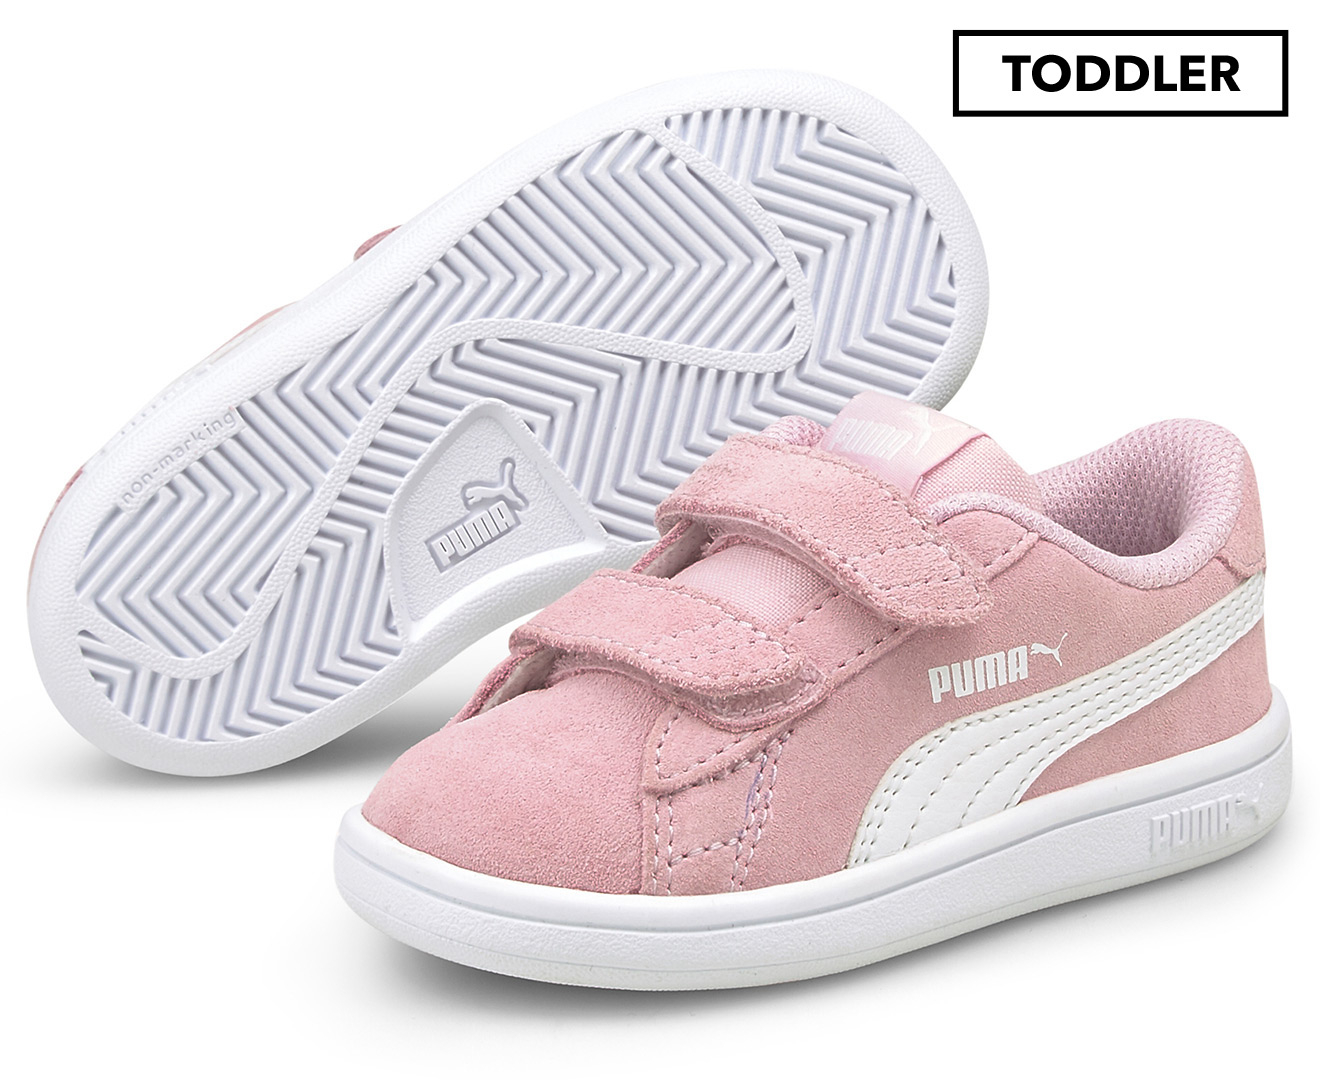 Puma Toddler Girls\' Suede White V2 Sneakers Lady/Puma Smash - Pink